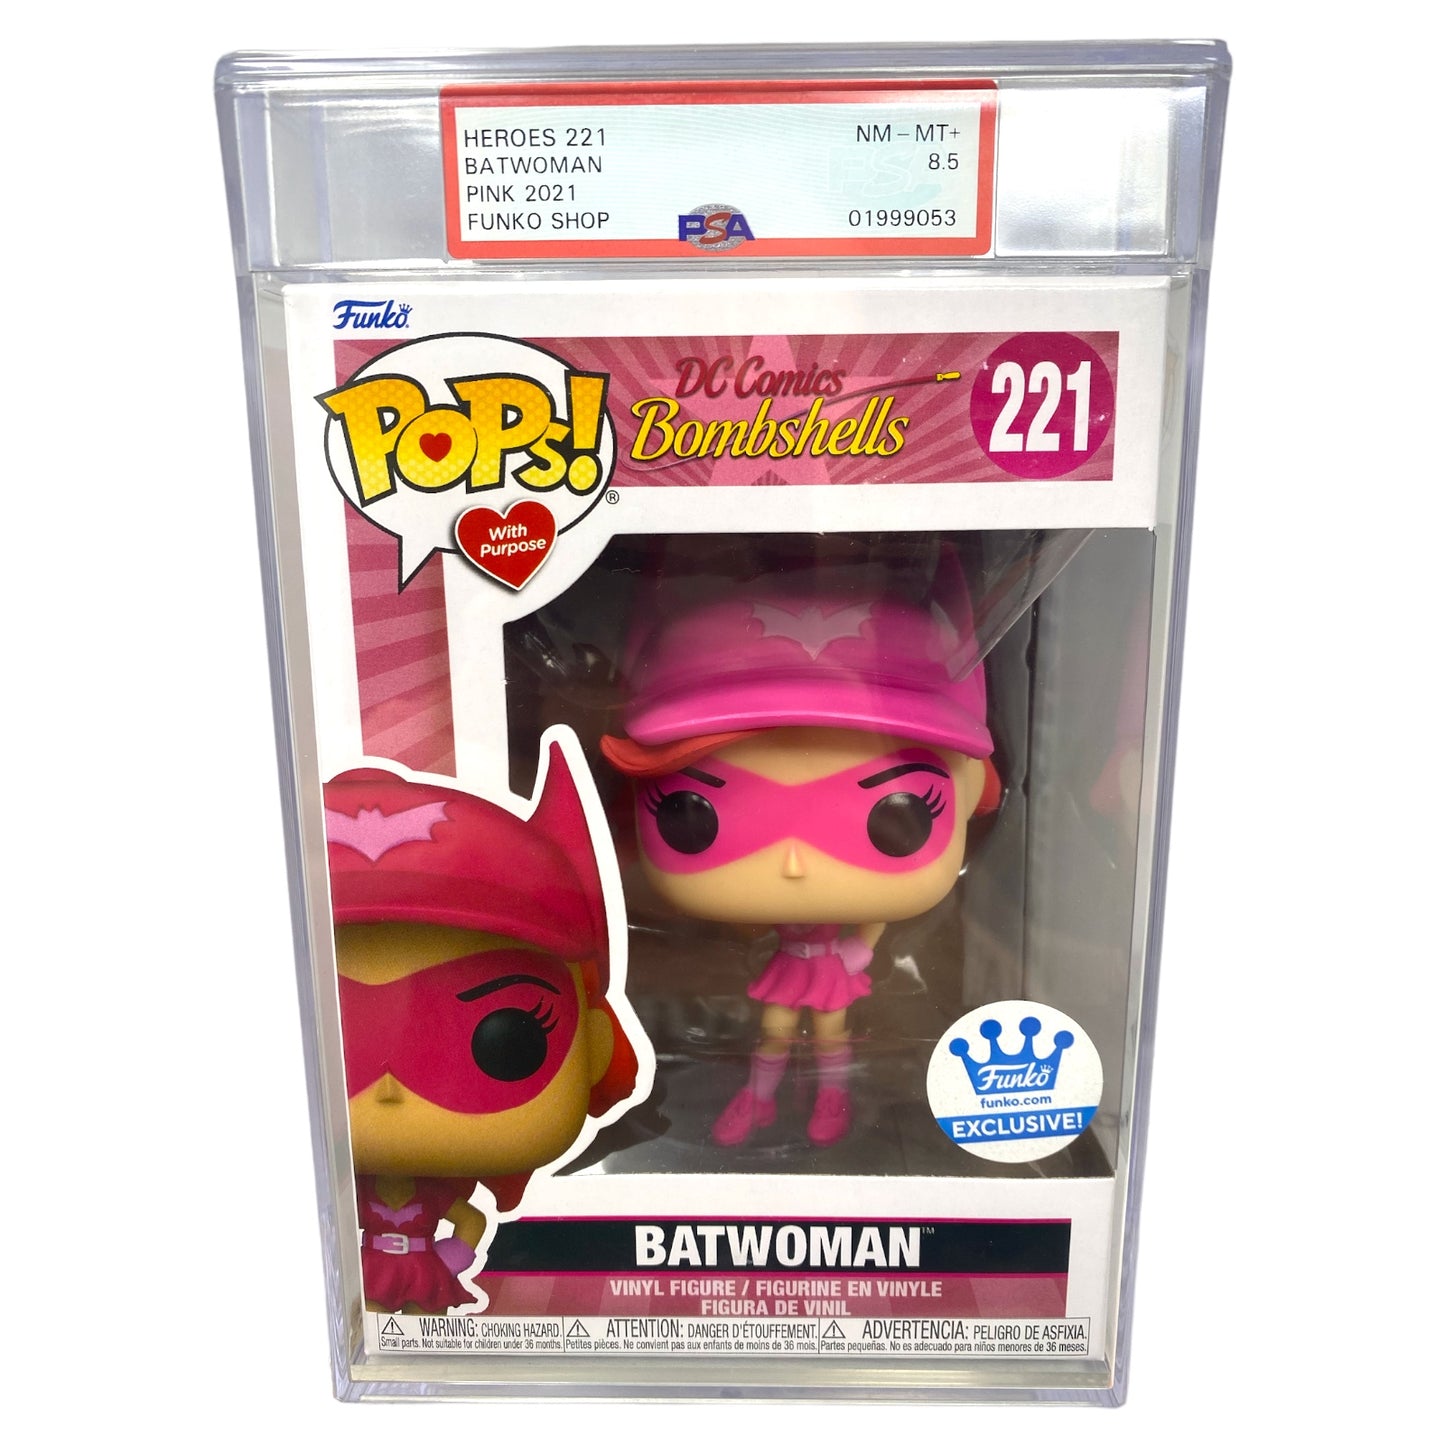 PSA Grade 8.5 Pink 2021 Batwoman 221 Funko Shop Exclusive